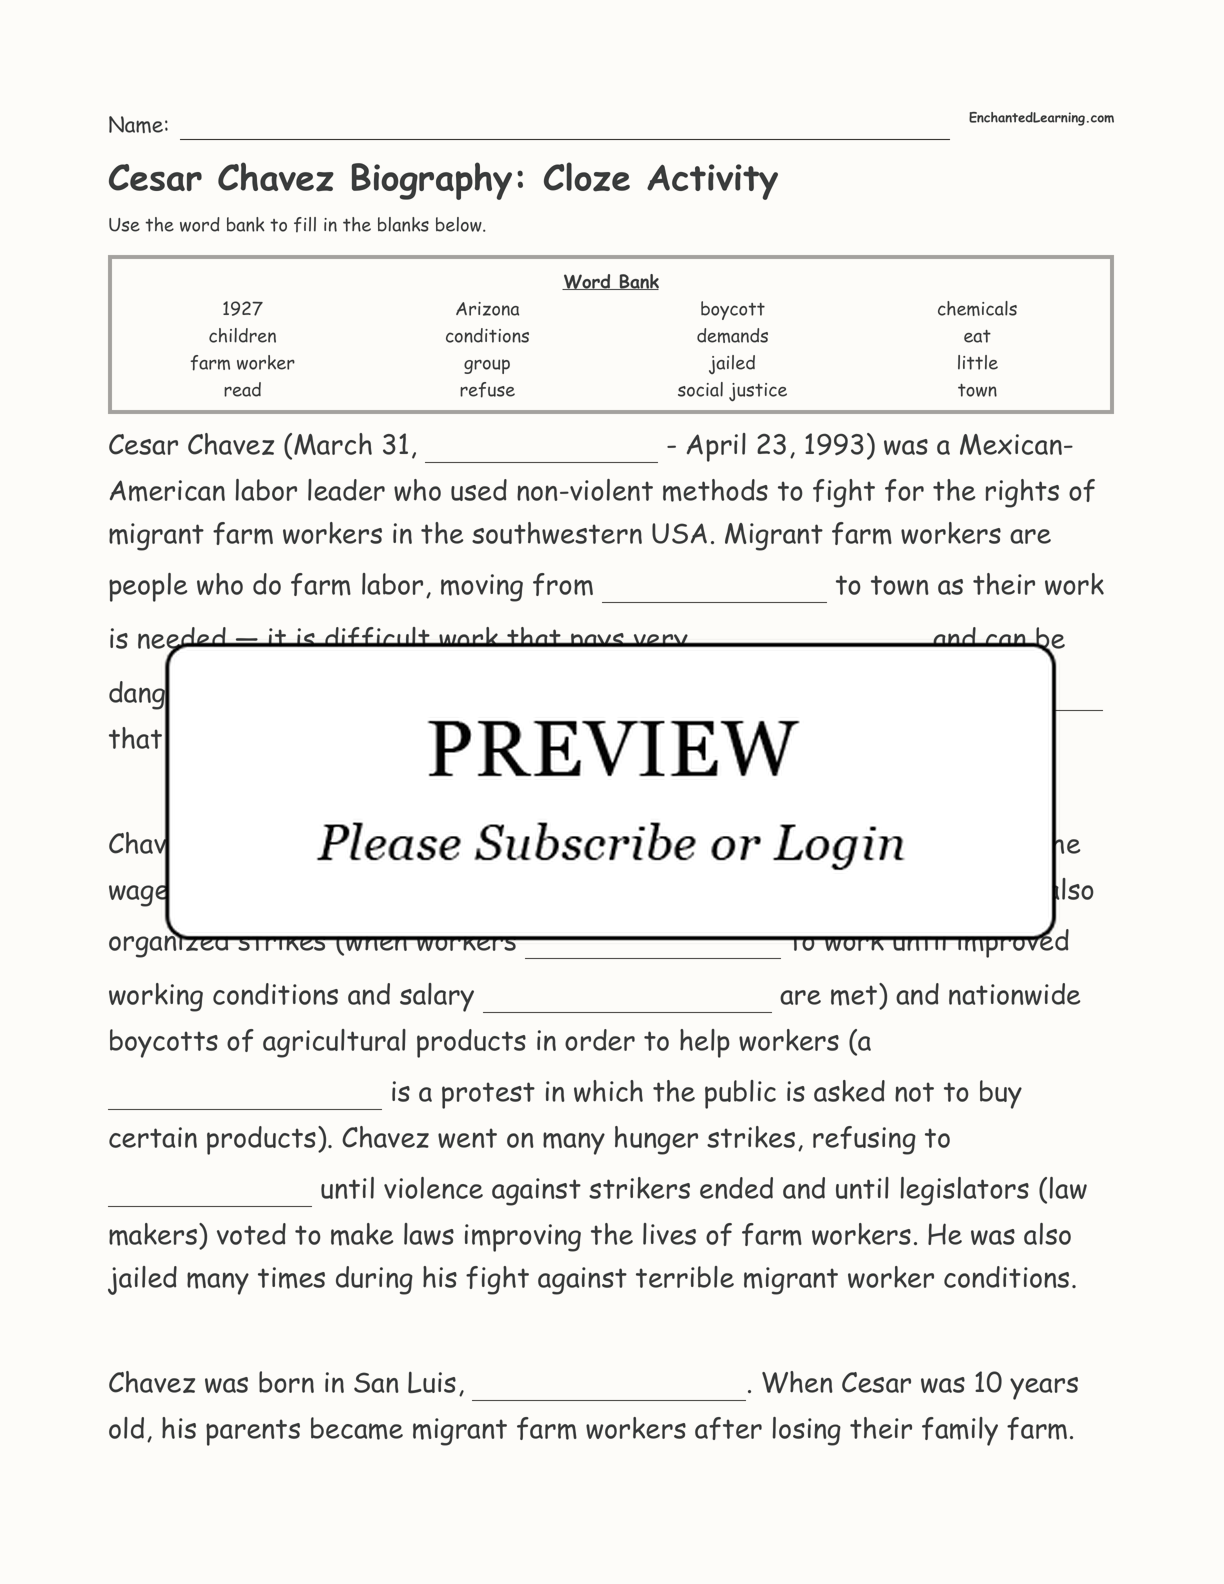 Cesar Chavez Biography: Cloze Activity interactive worksheet page 1